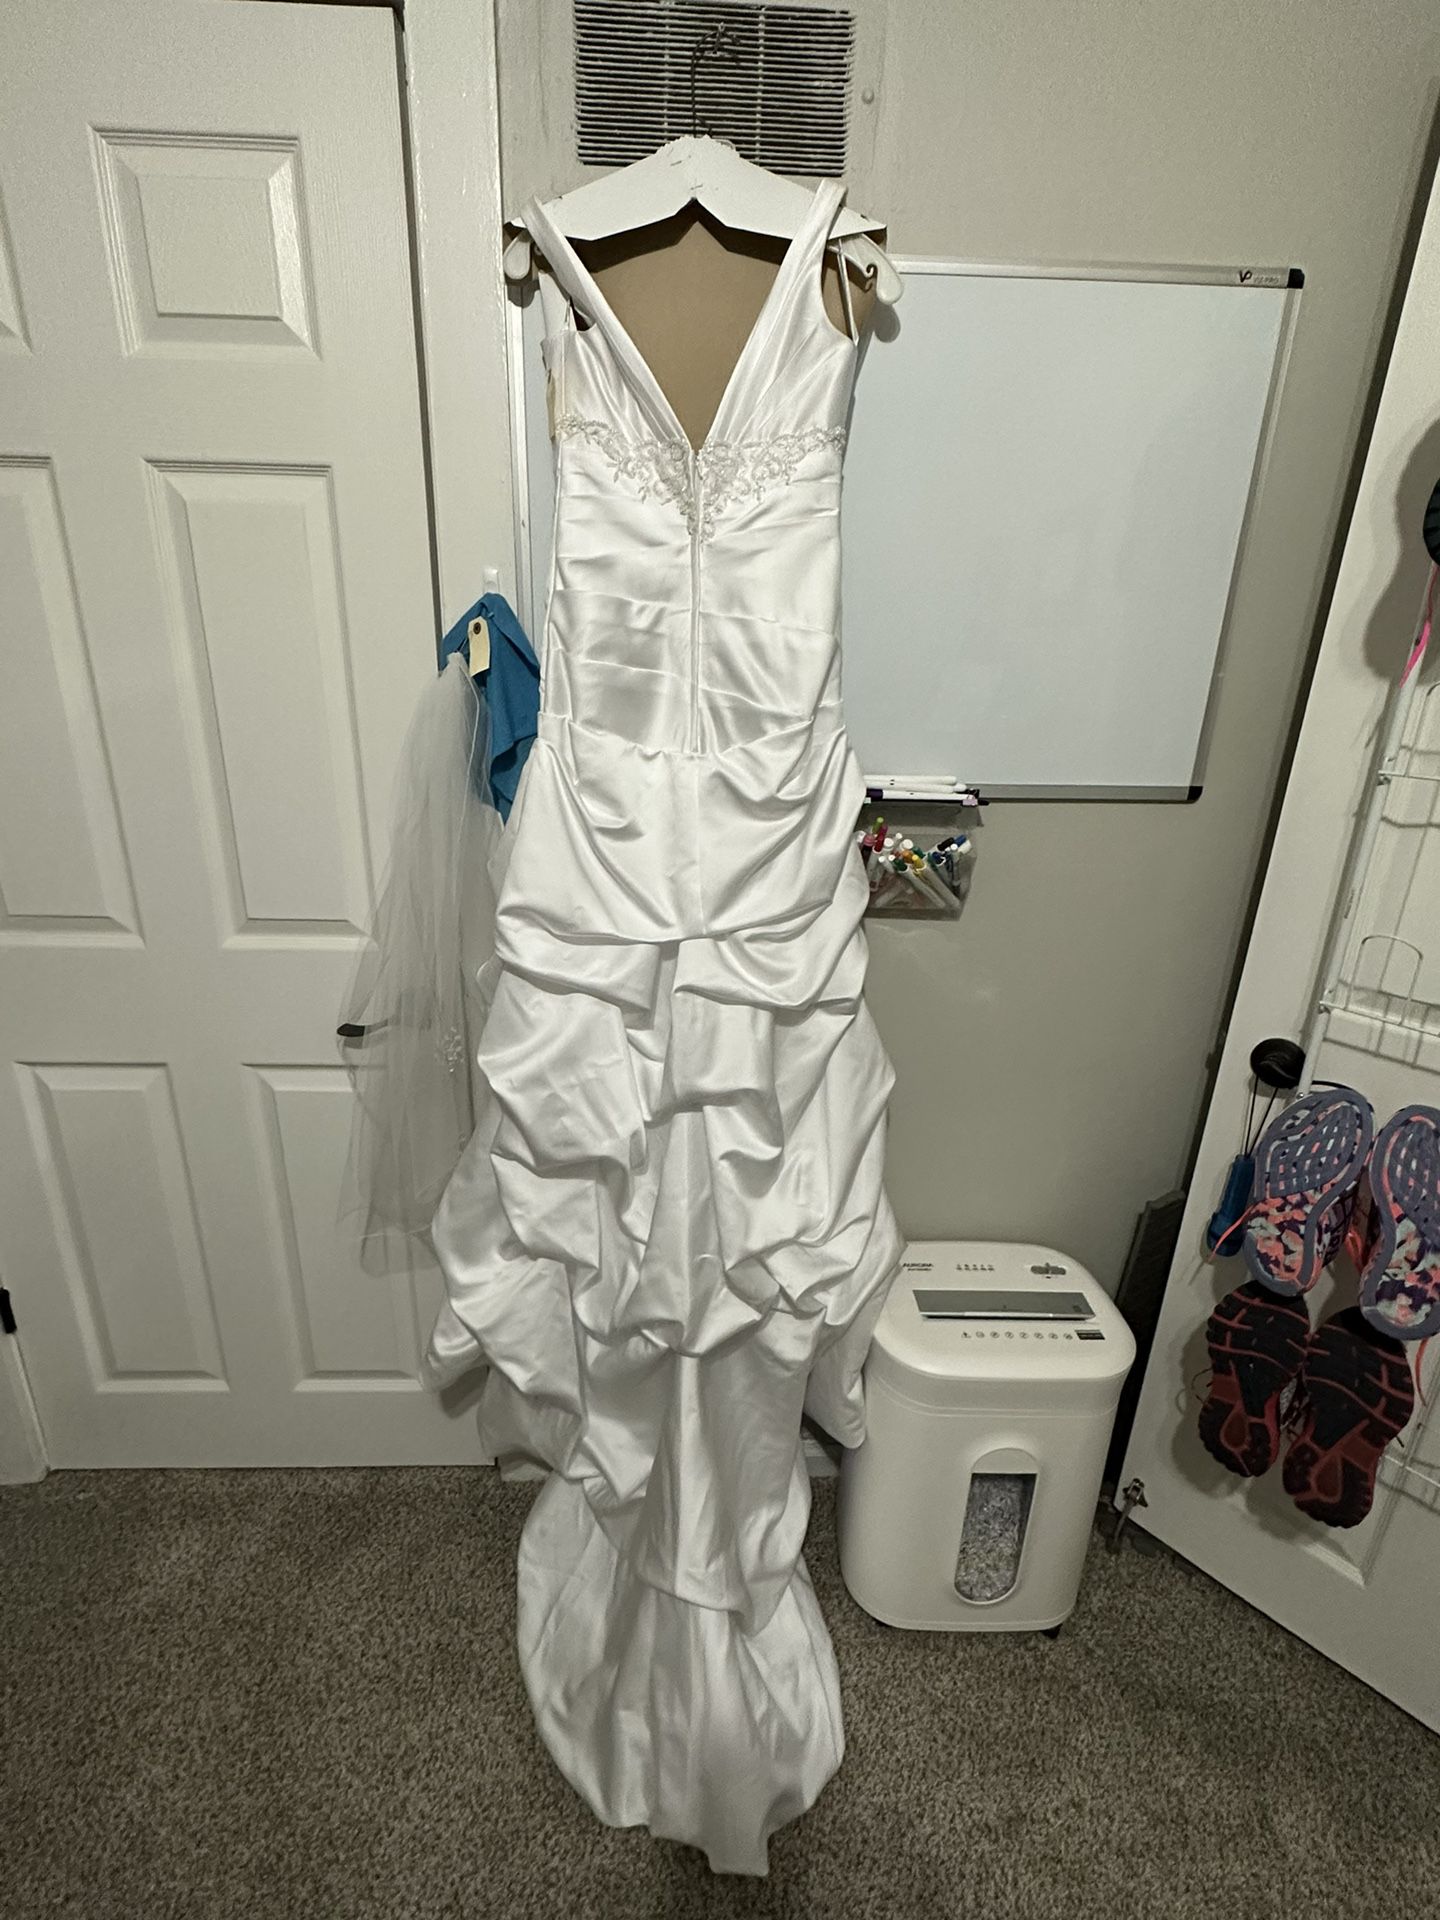 Wedding Dress and Veil 